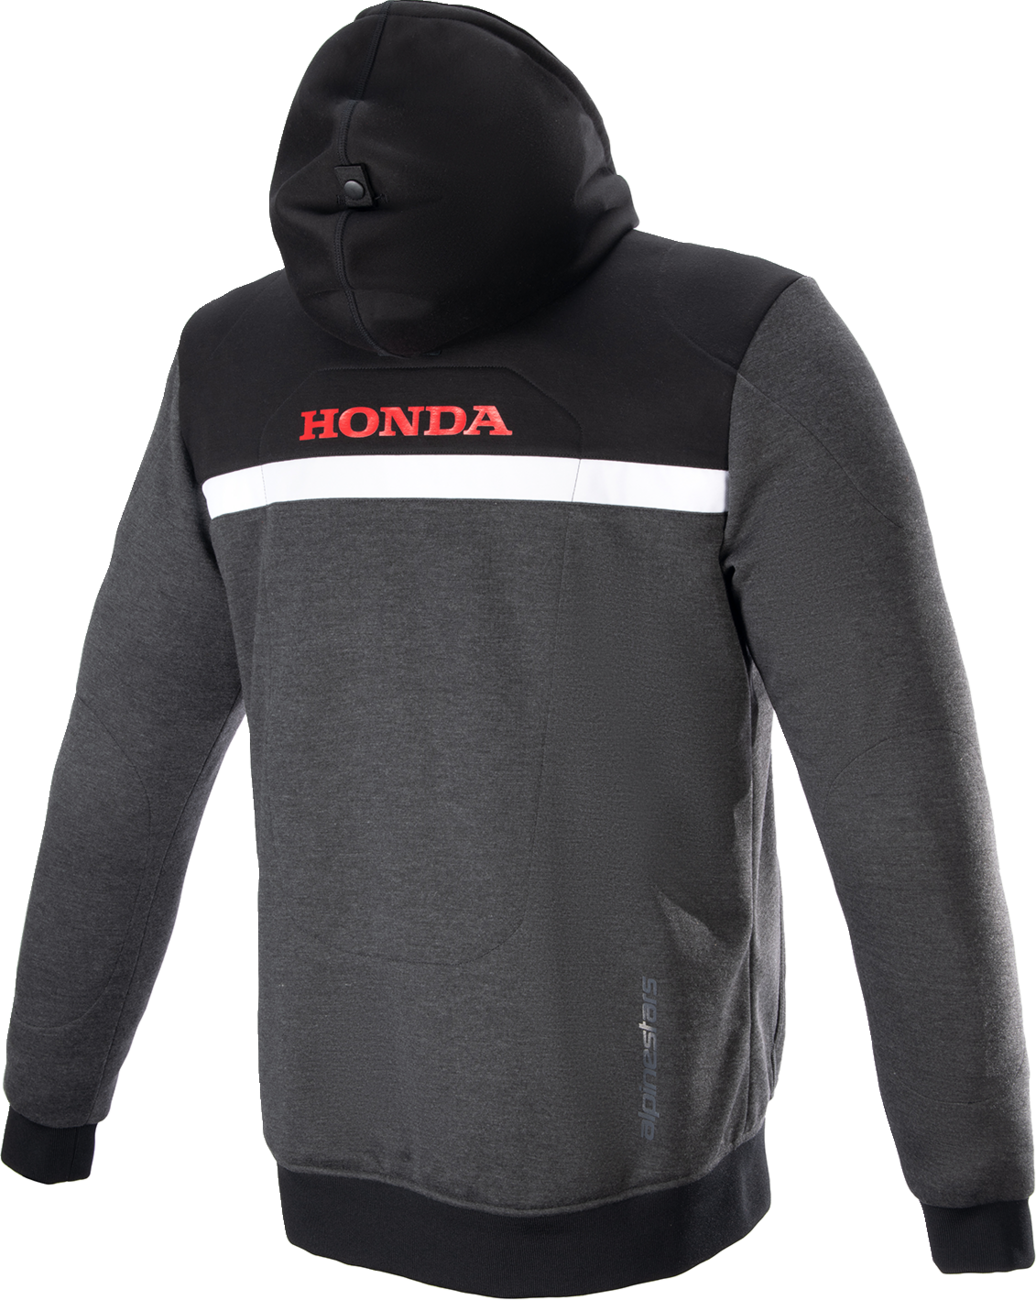 ALPINESTARS Honda Chrome Street Hoodie - Black/Gray/Red - Large 4201323-1908-L